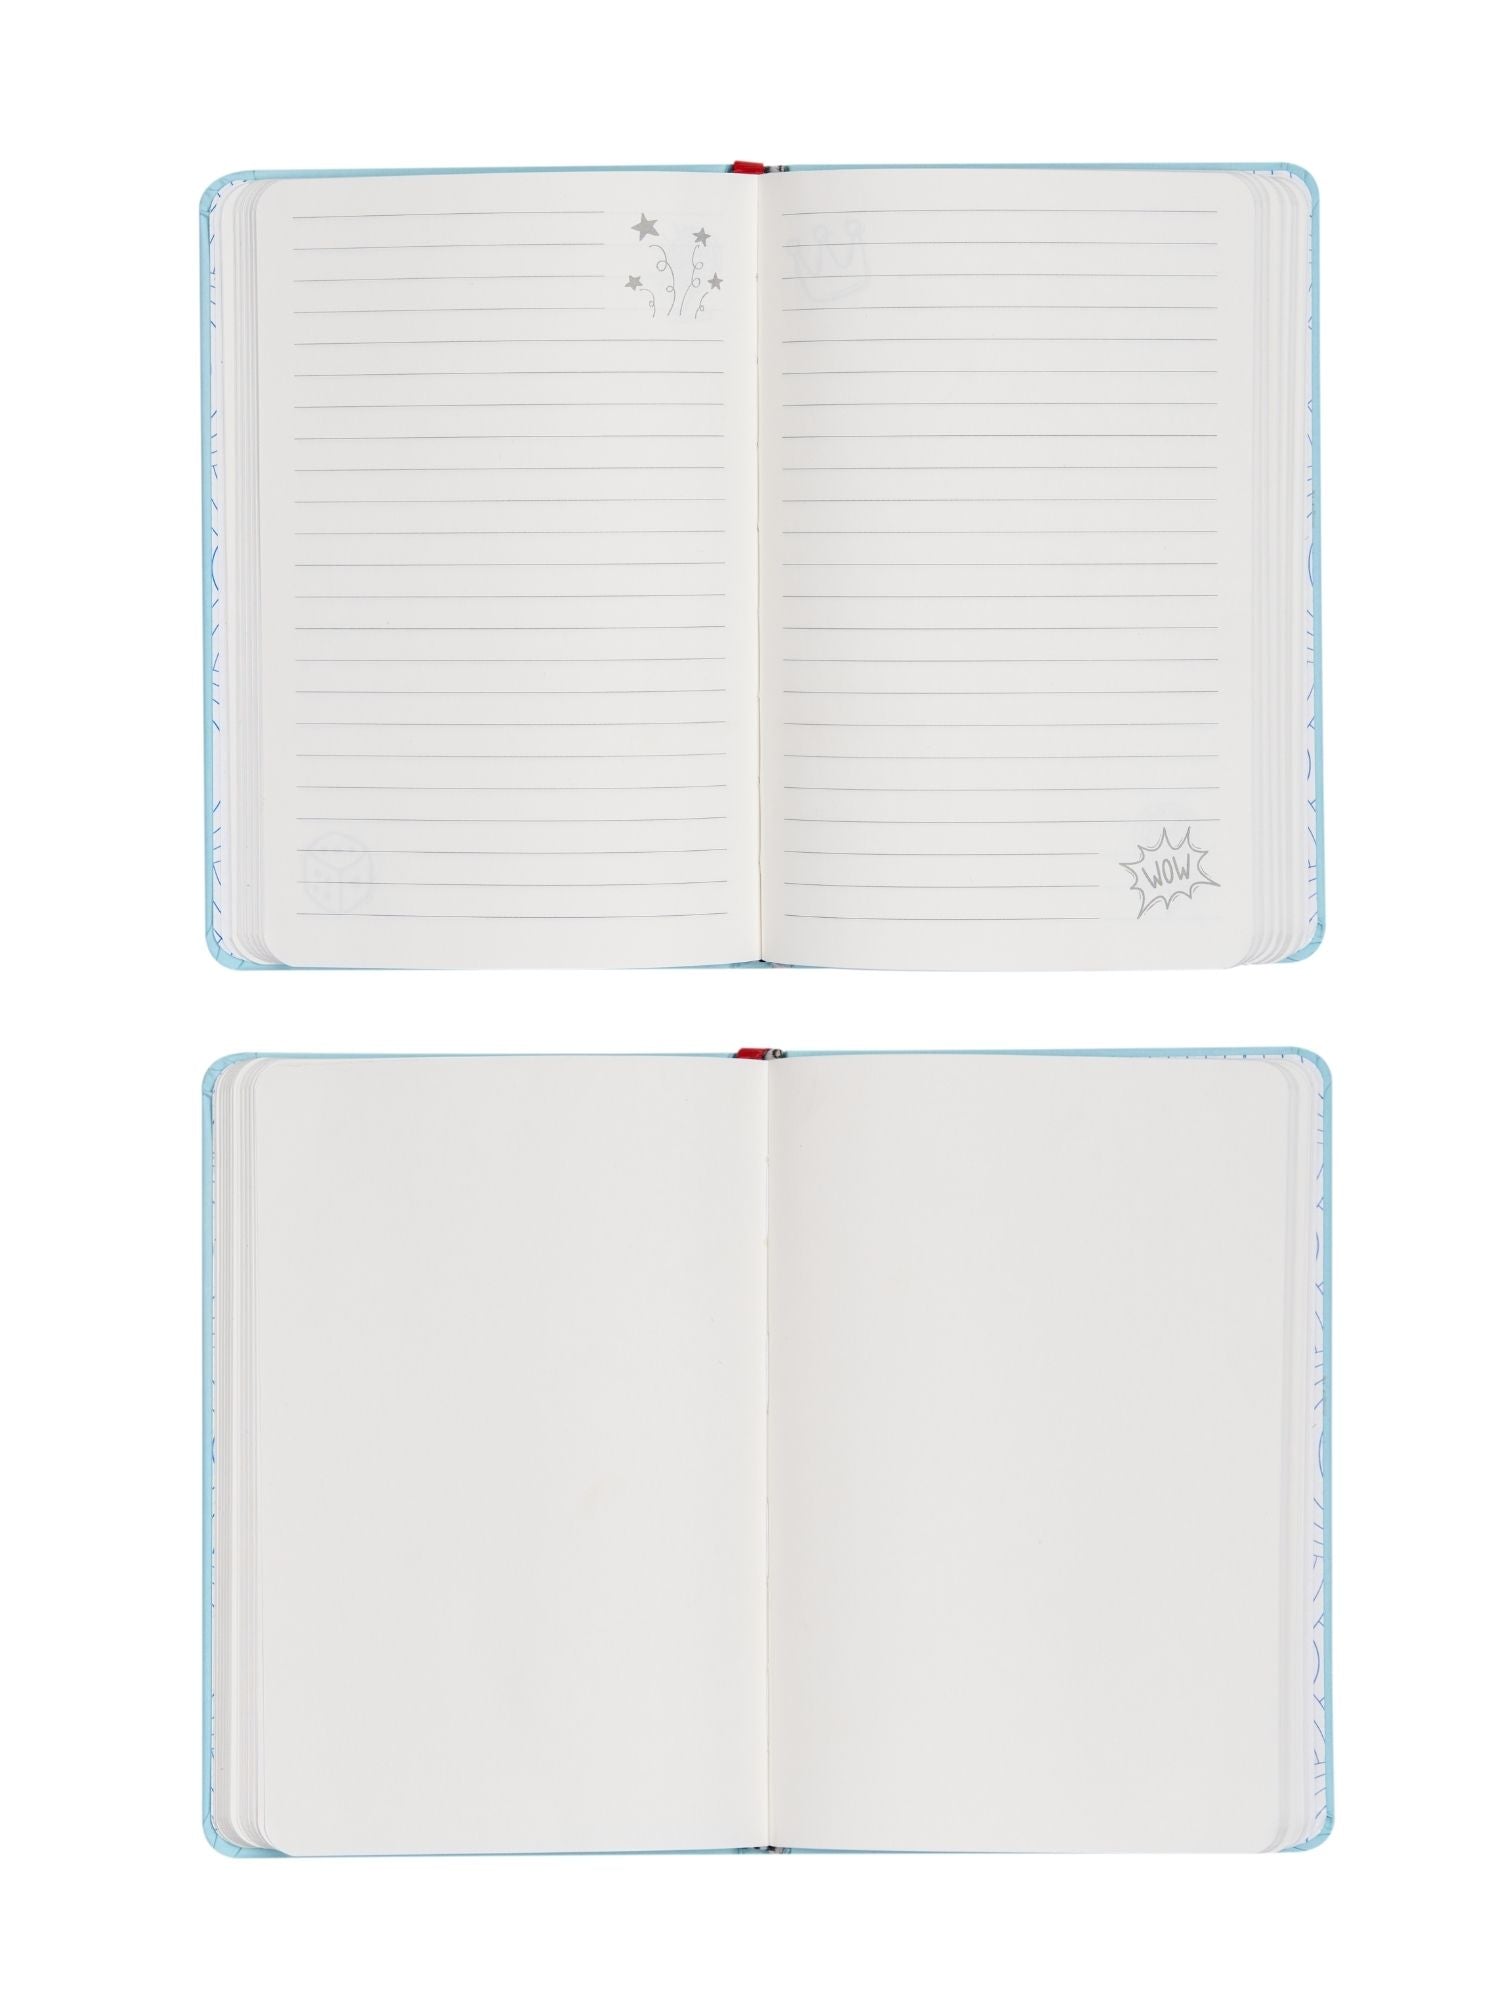 Doodle Initial W Stripes Theme Premium Hard Bound B6 Notebook Diary